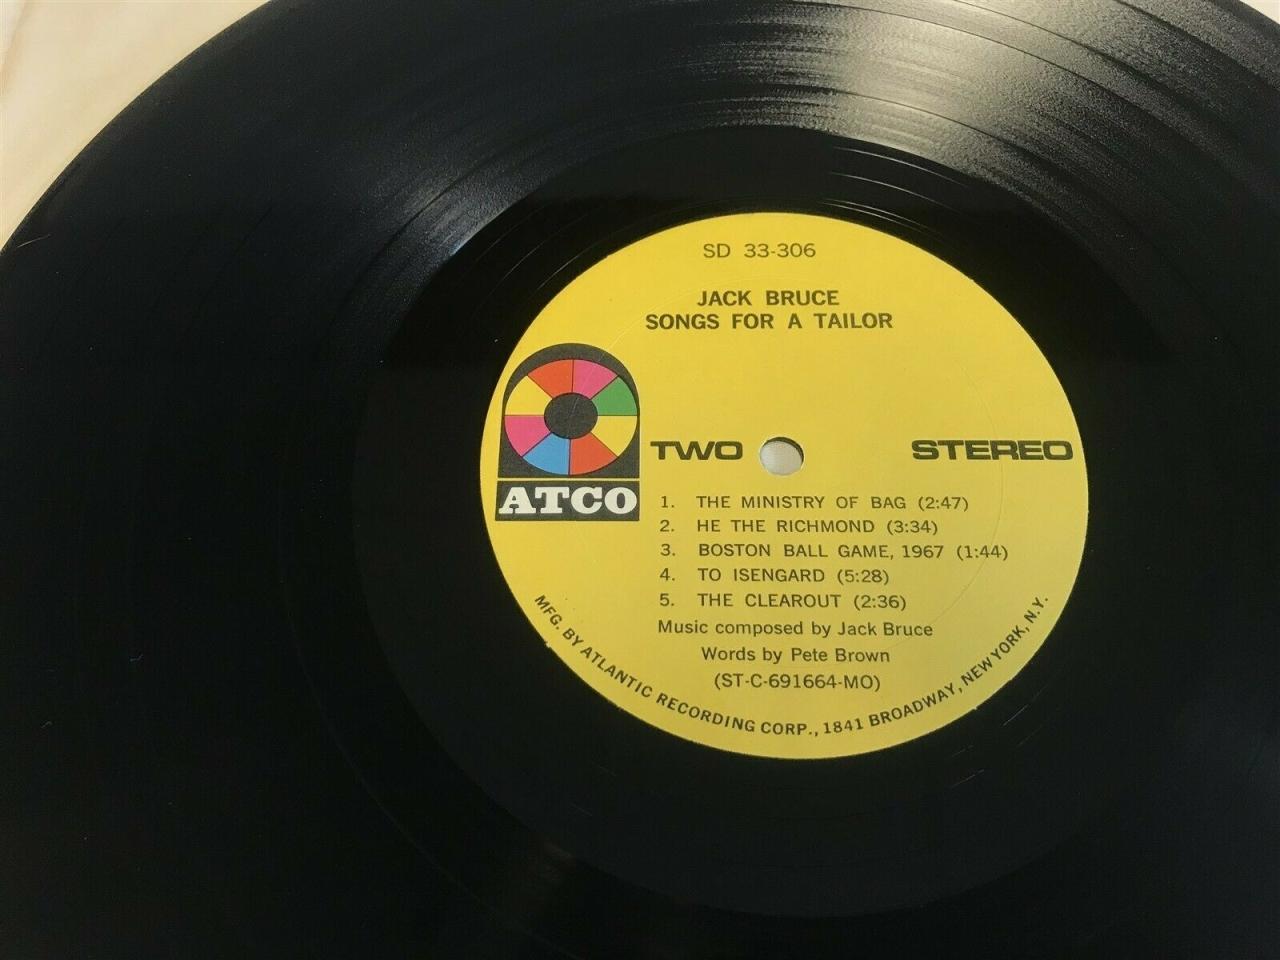 JACK BRUCE Songs For A Tailor 1969 LP Vinyl Album